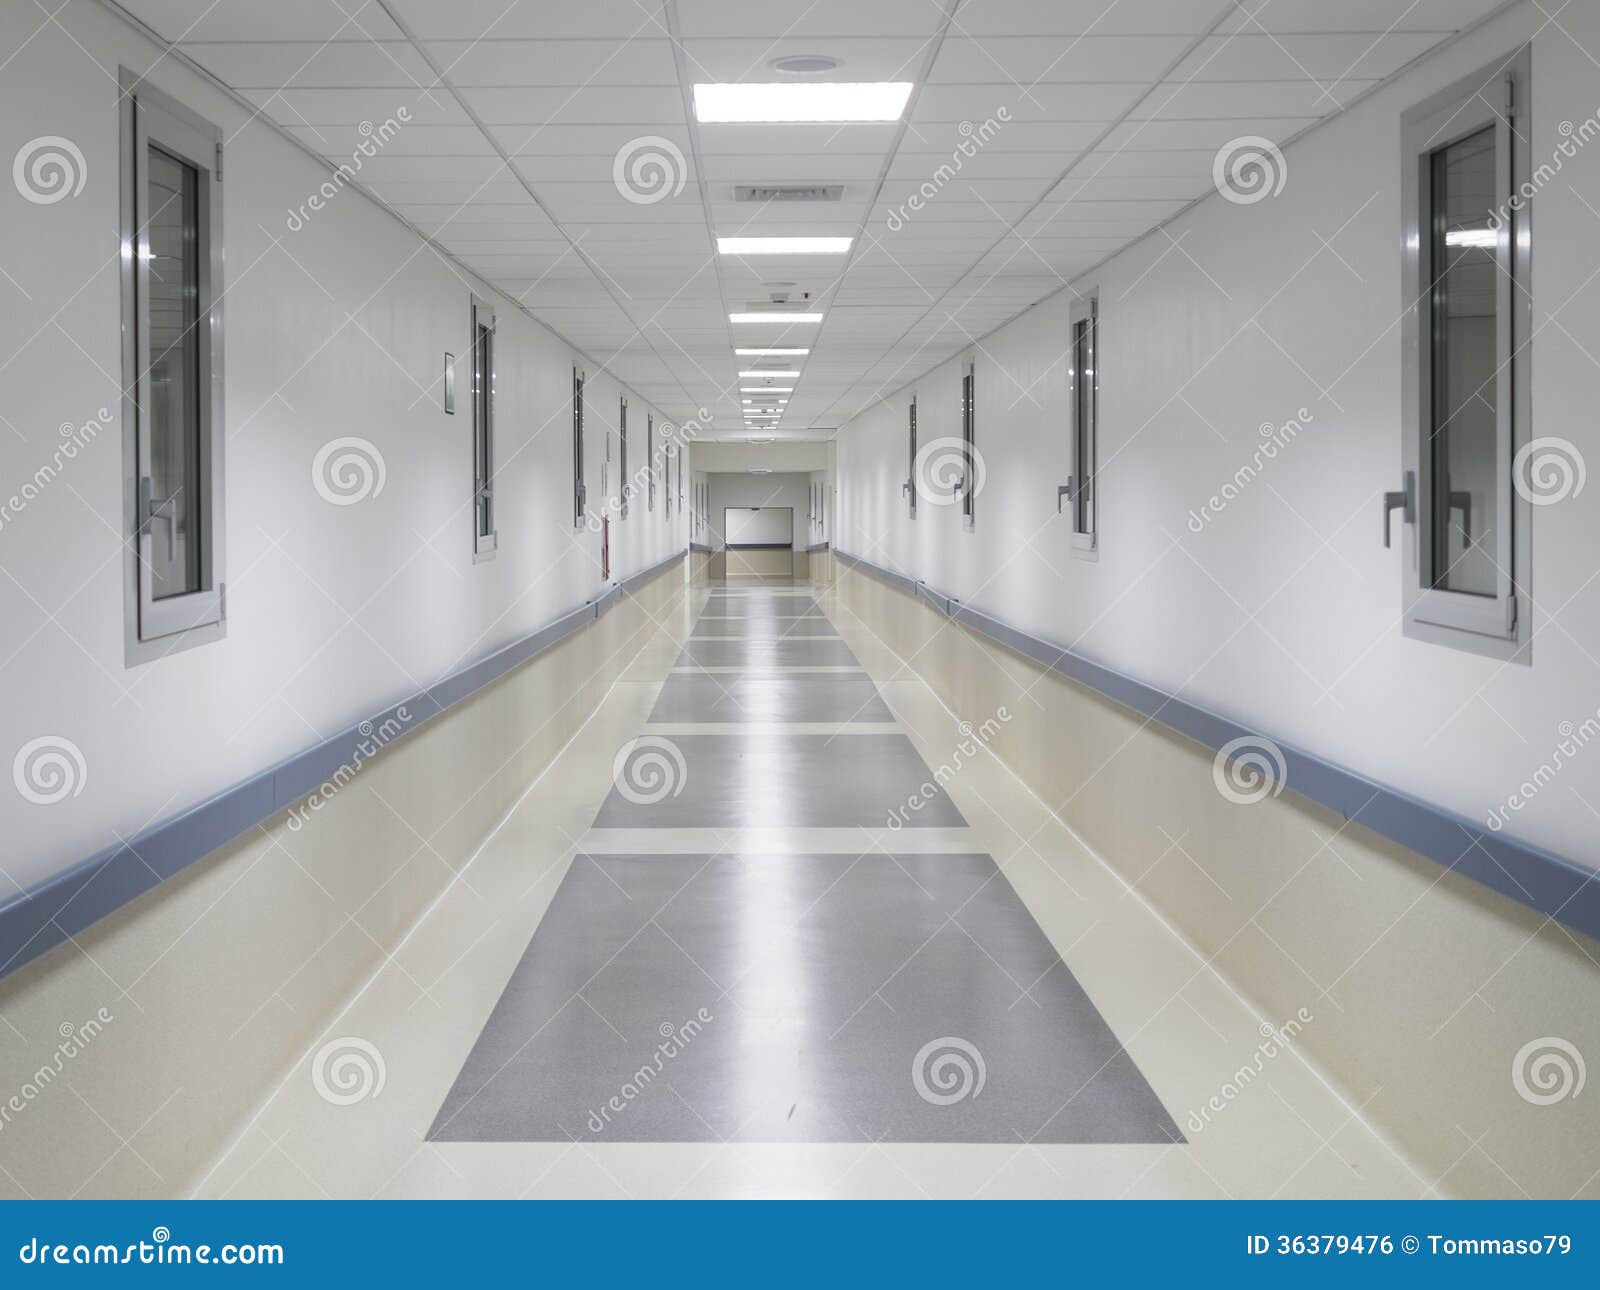 Hospital Corridor Royalty Free Stock Image - Image: 36379476